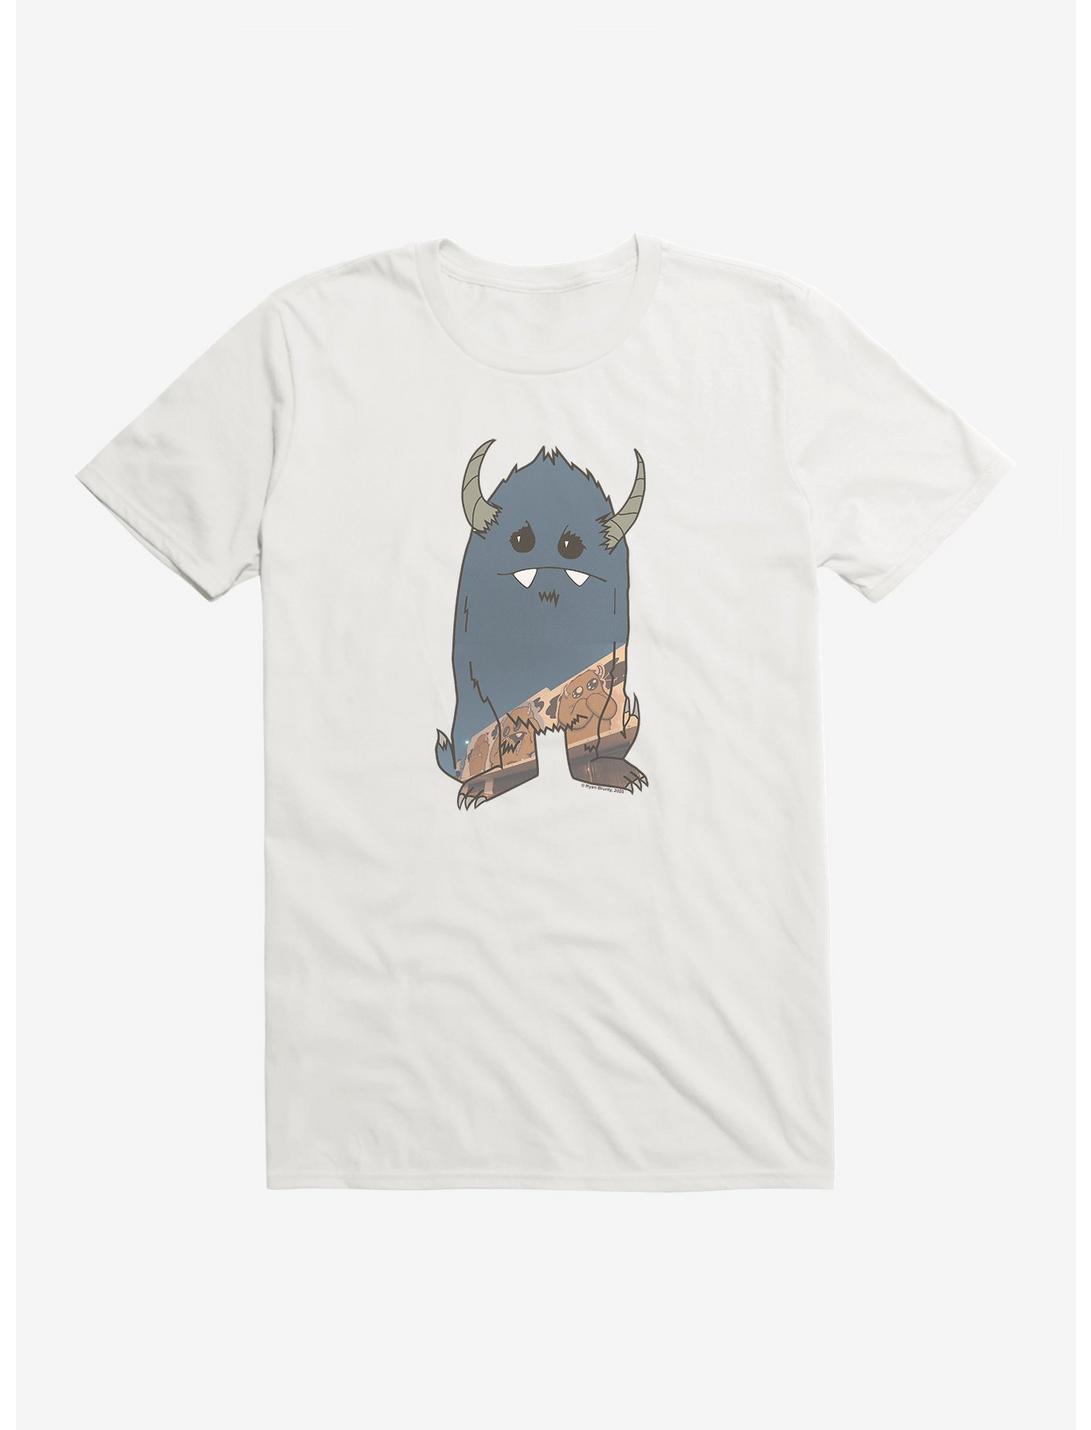 Depressed Monsters Yerman Mural T-Shirt By Ryan Brunty, , hi-res